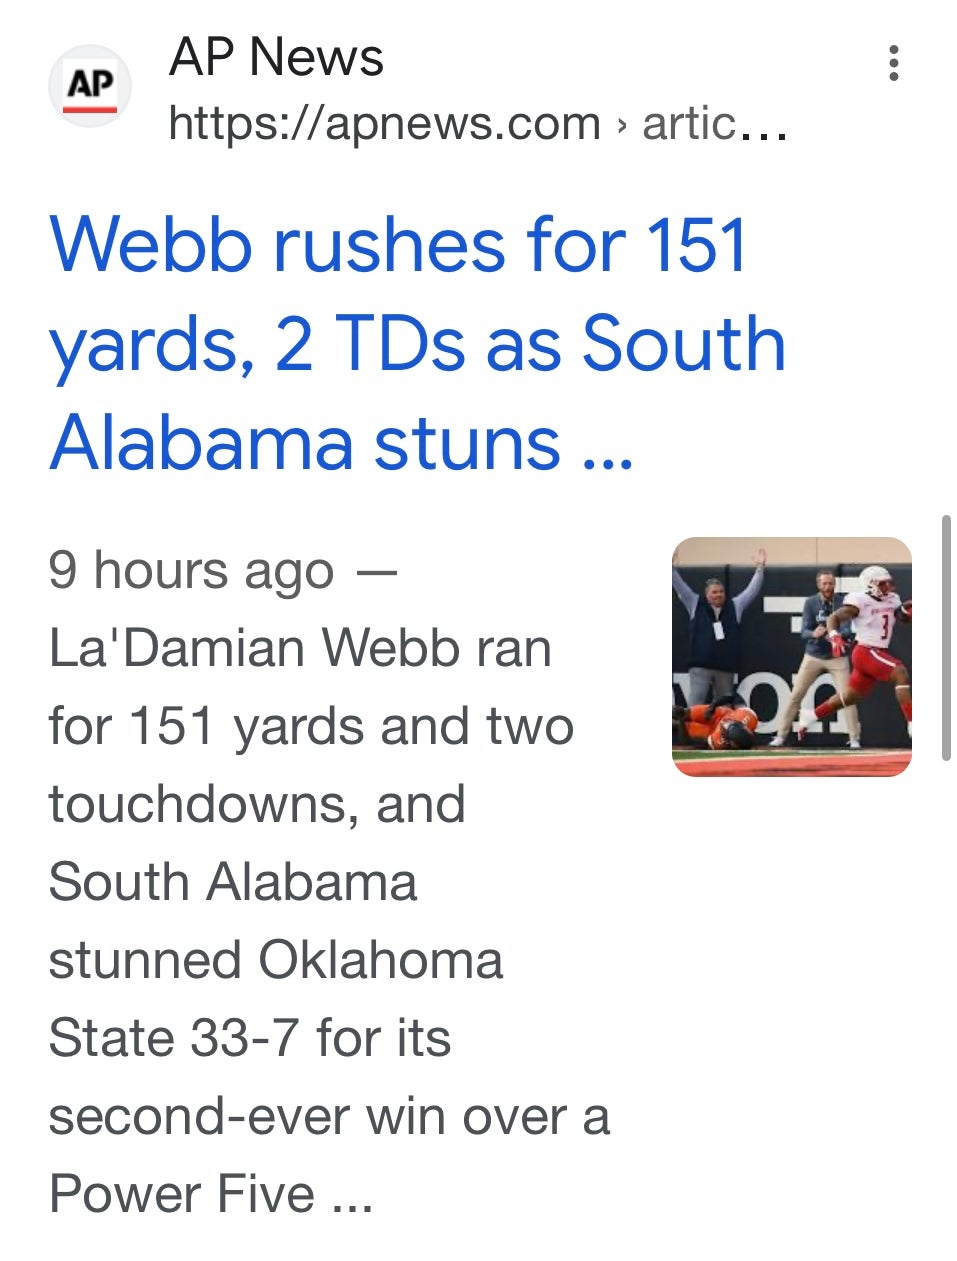 Webb rushes for 151 yards, 2 TDs as South Alabama stuns Oklahoma